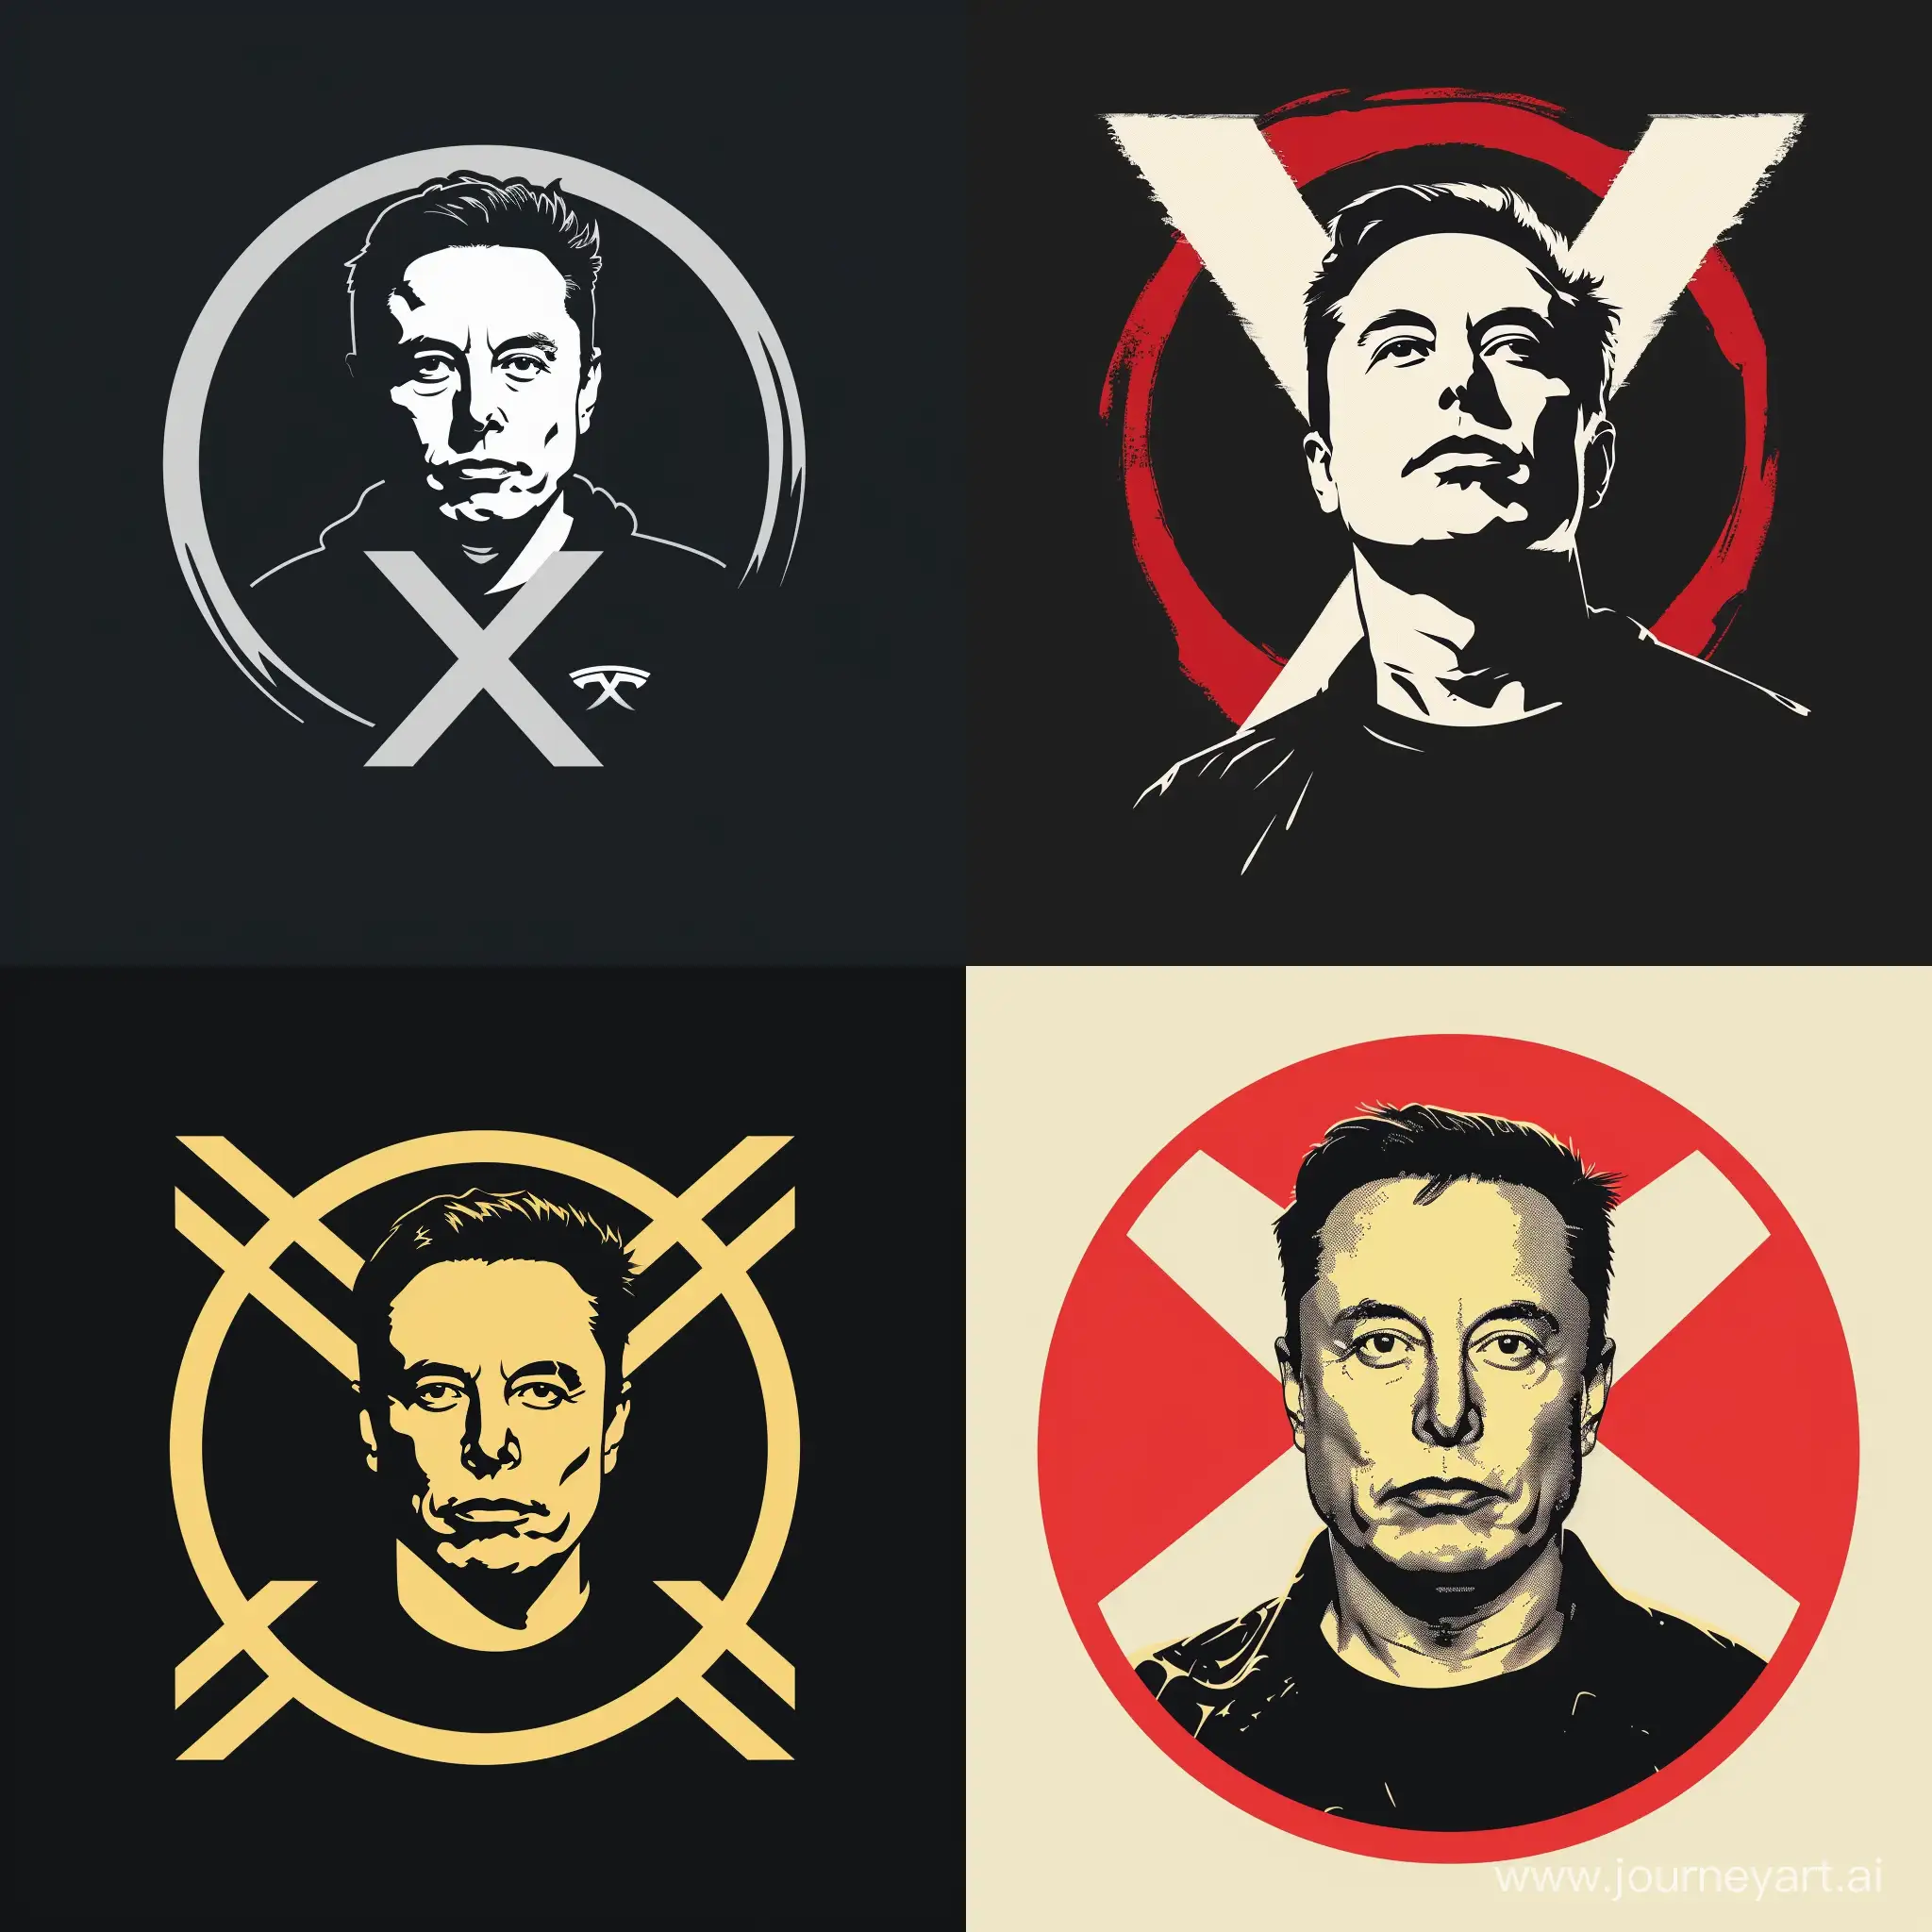 Elon-Musks-Face-on-X-Company-Logo-Artwork